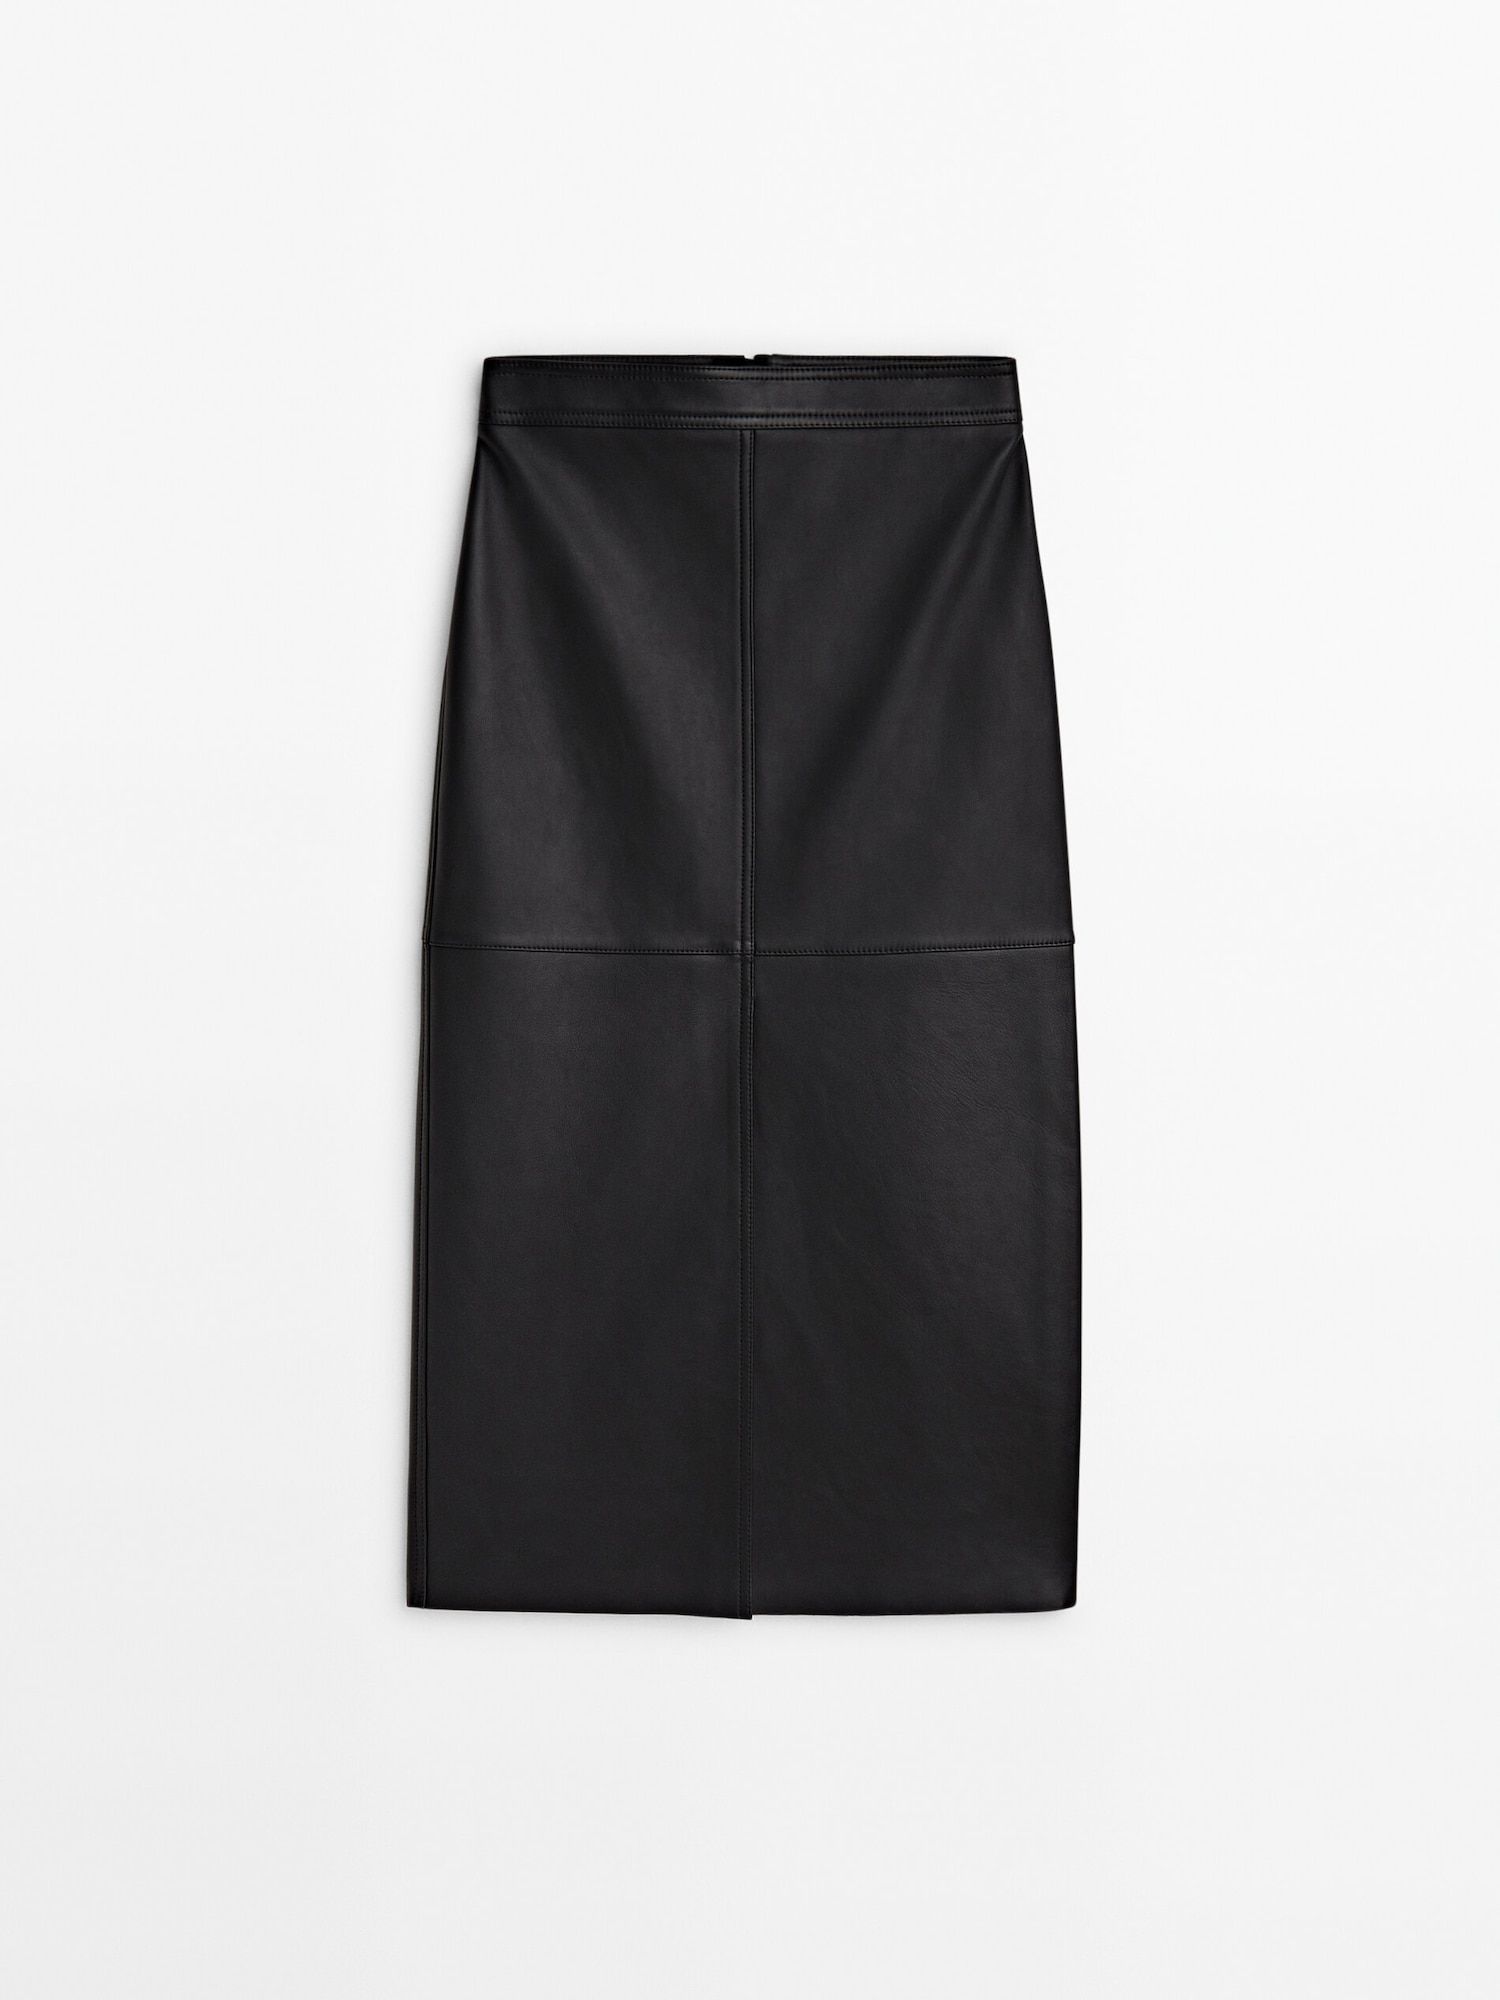 Black nappa leather midi skirt with slit | Massimo Dutti UK